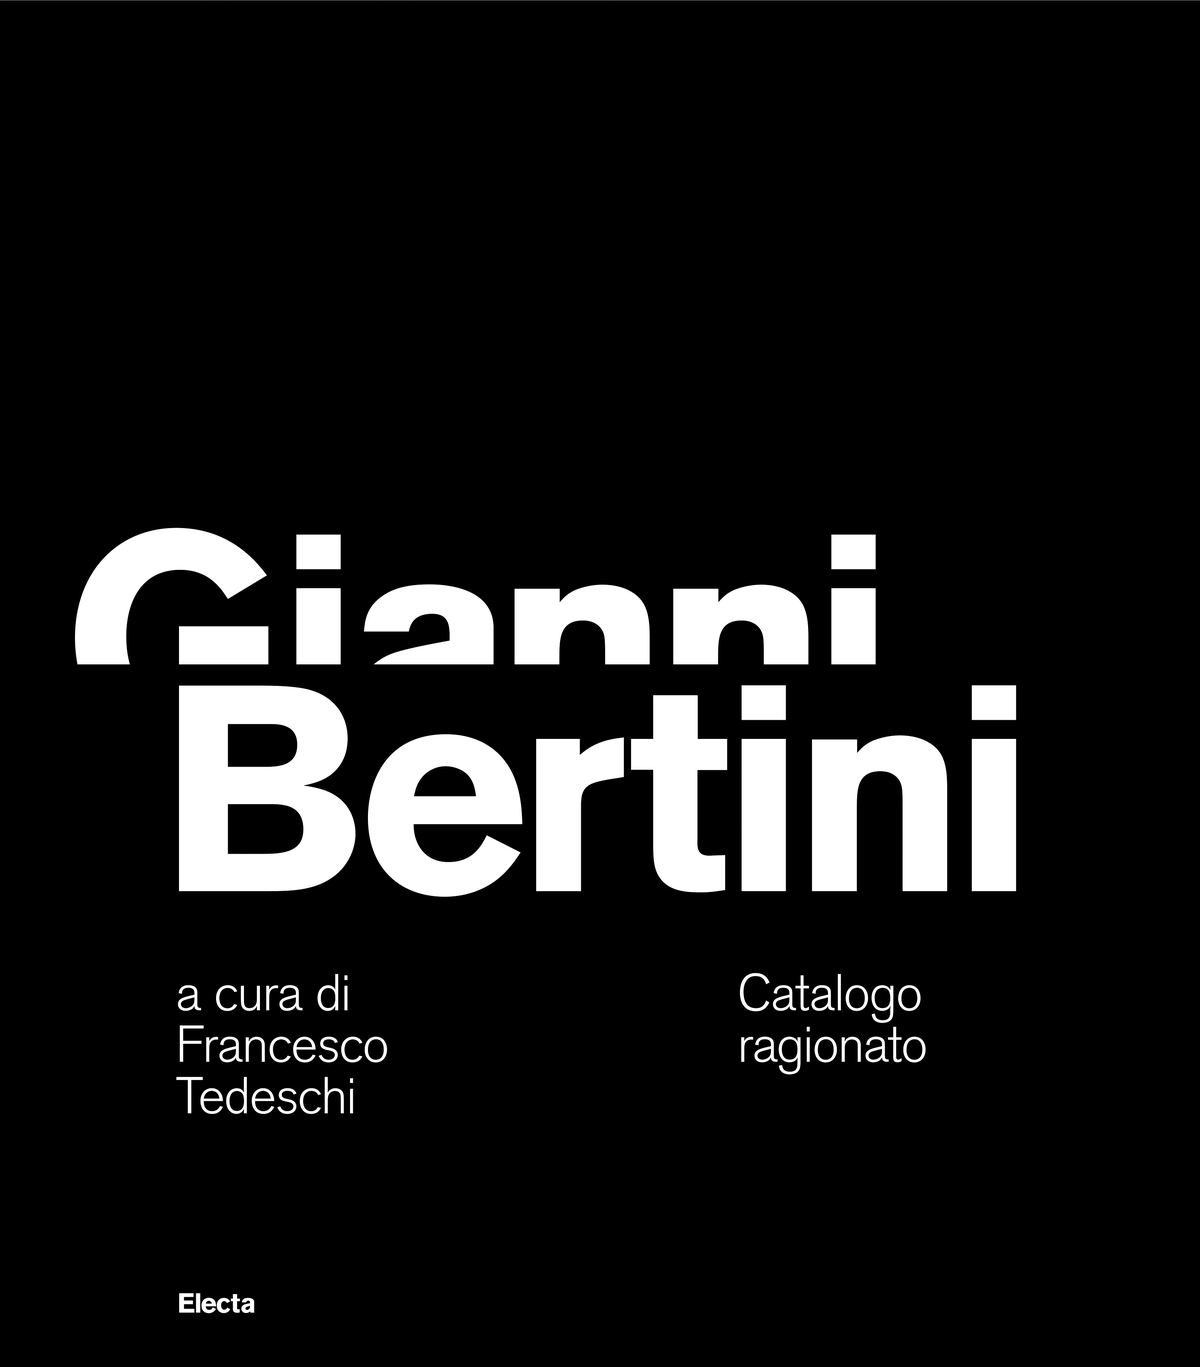 Francesco Tedeschi (a cura di) – Gianni Bertini. Catalogo ragionato (Electa, Milano 2021)